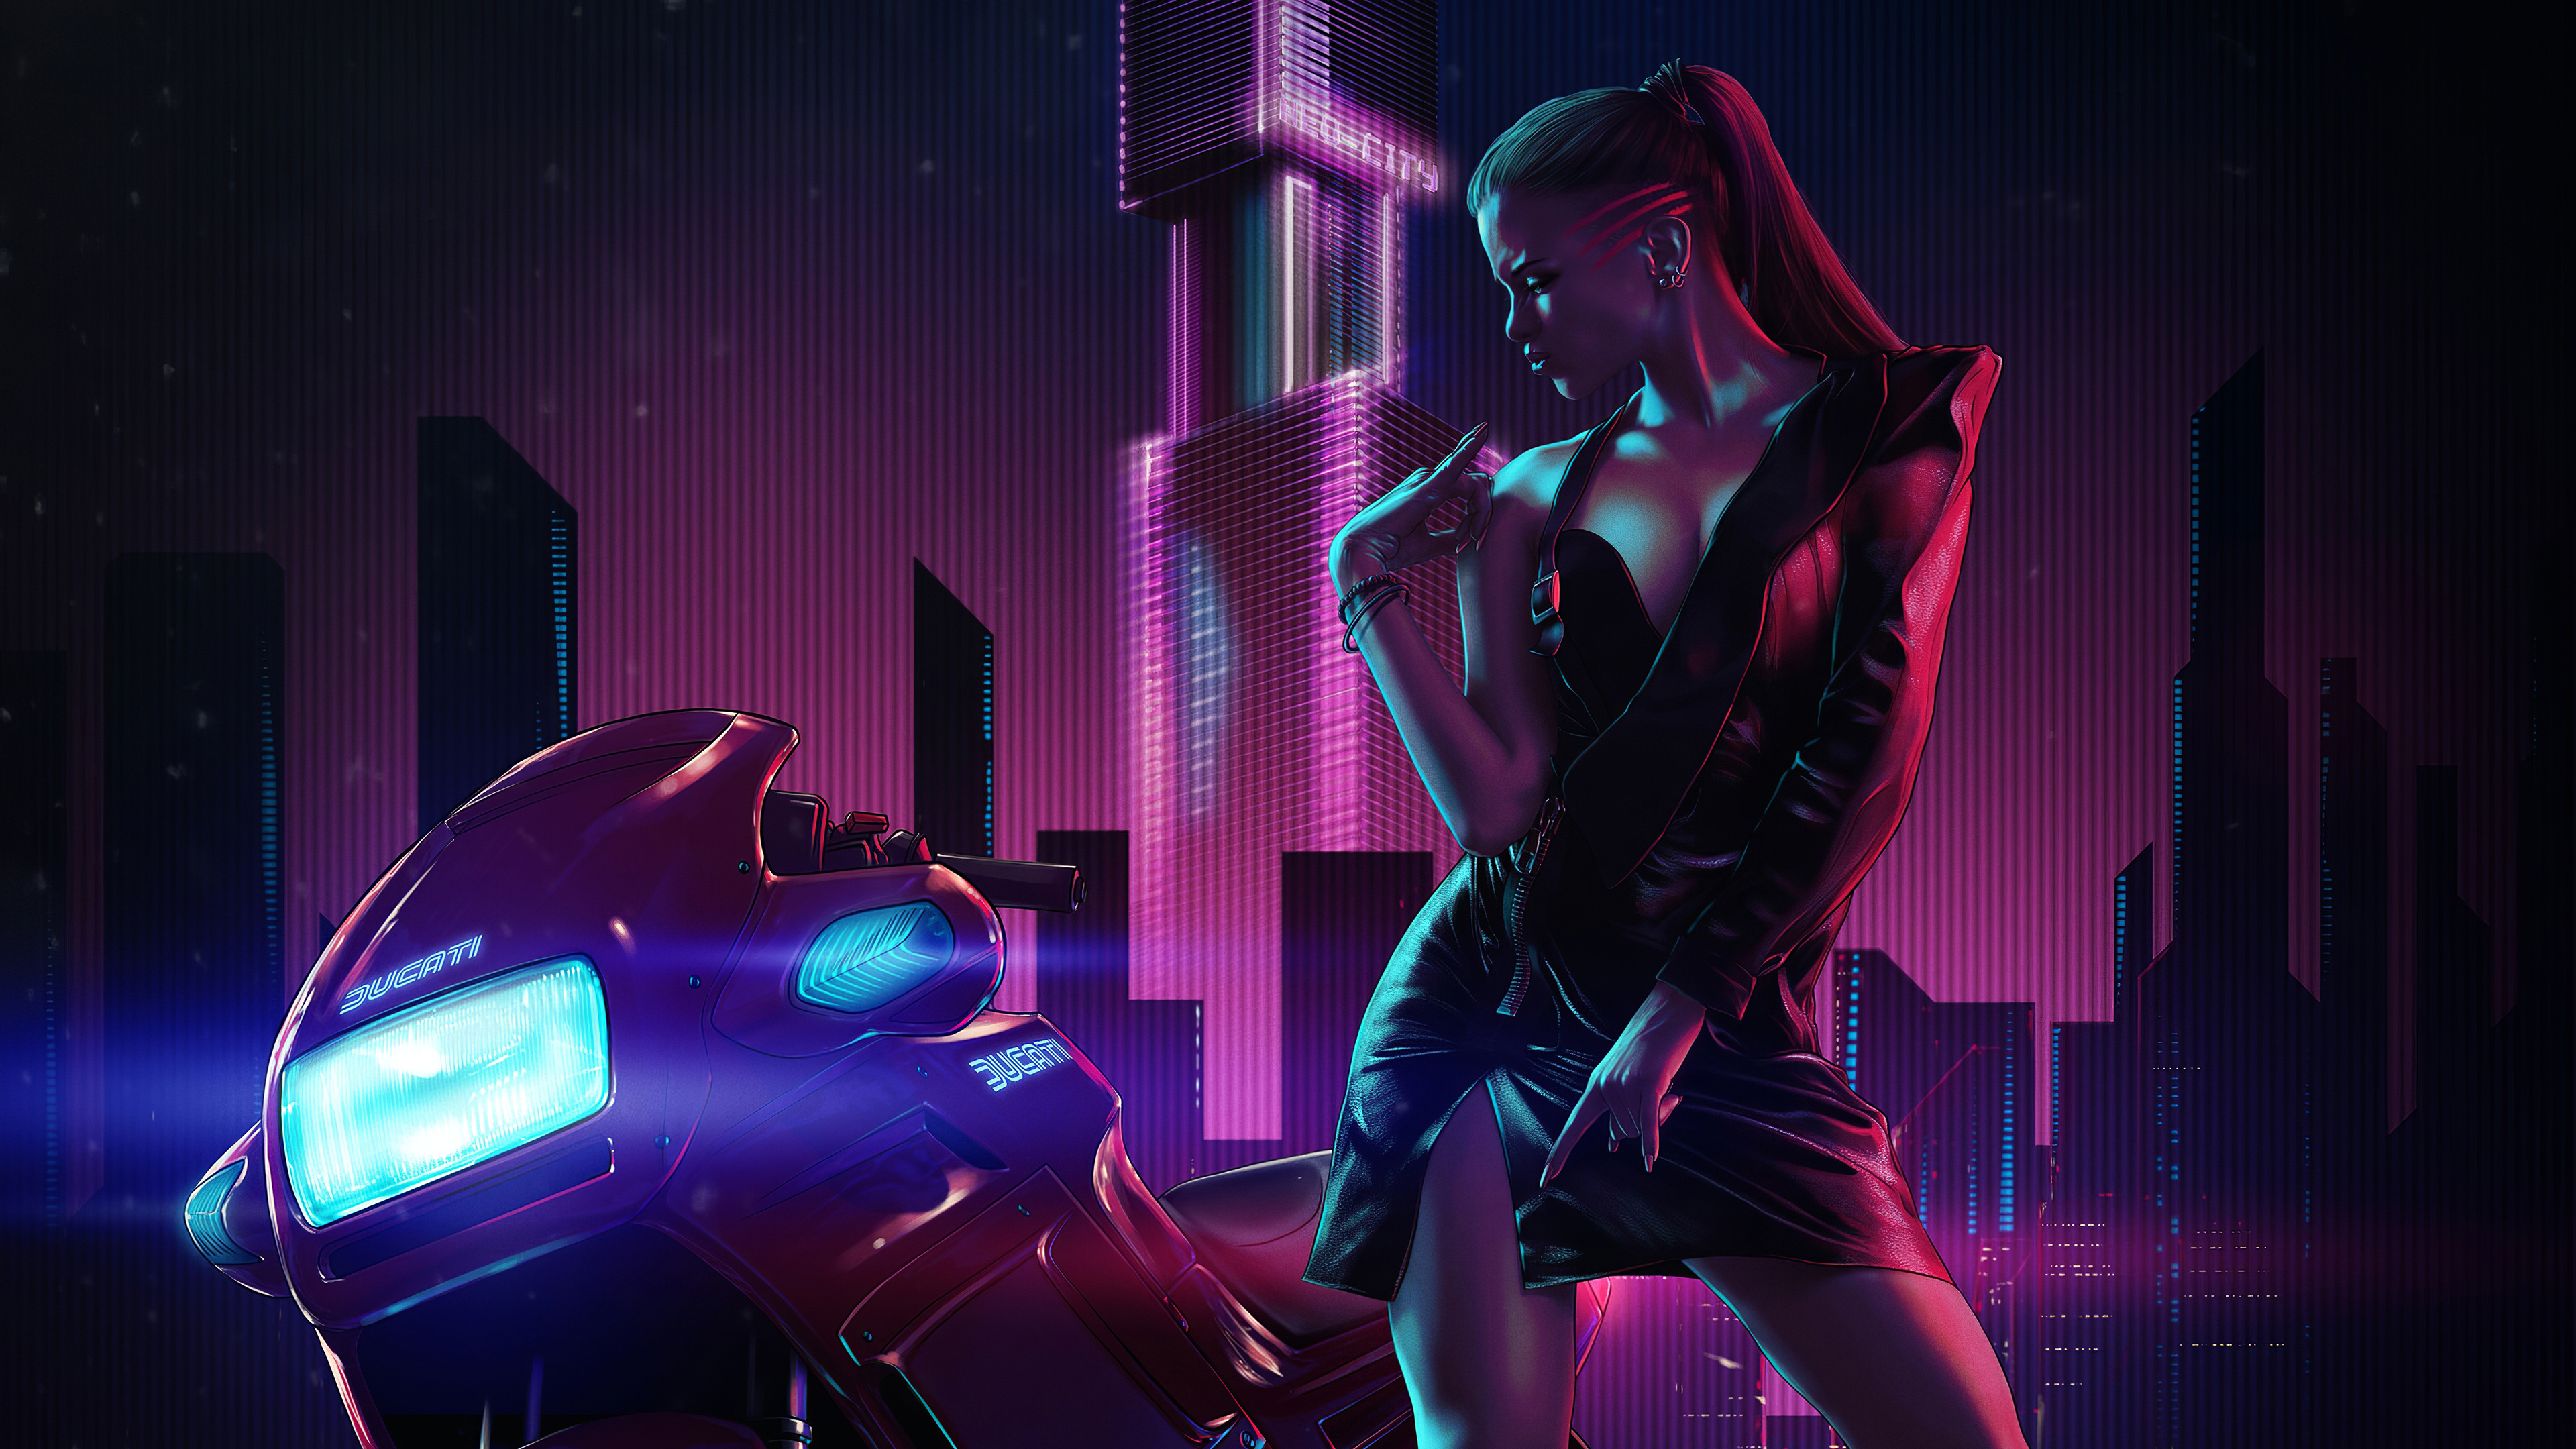 Cyberpunk Girl With Ducati 4k Hd Artist 4k Wallpapers Images